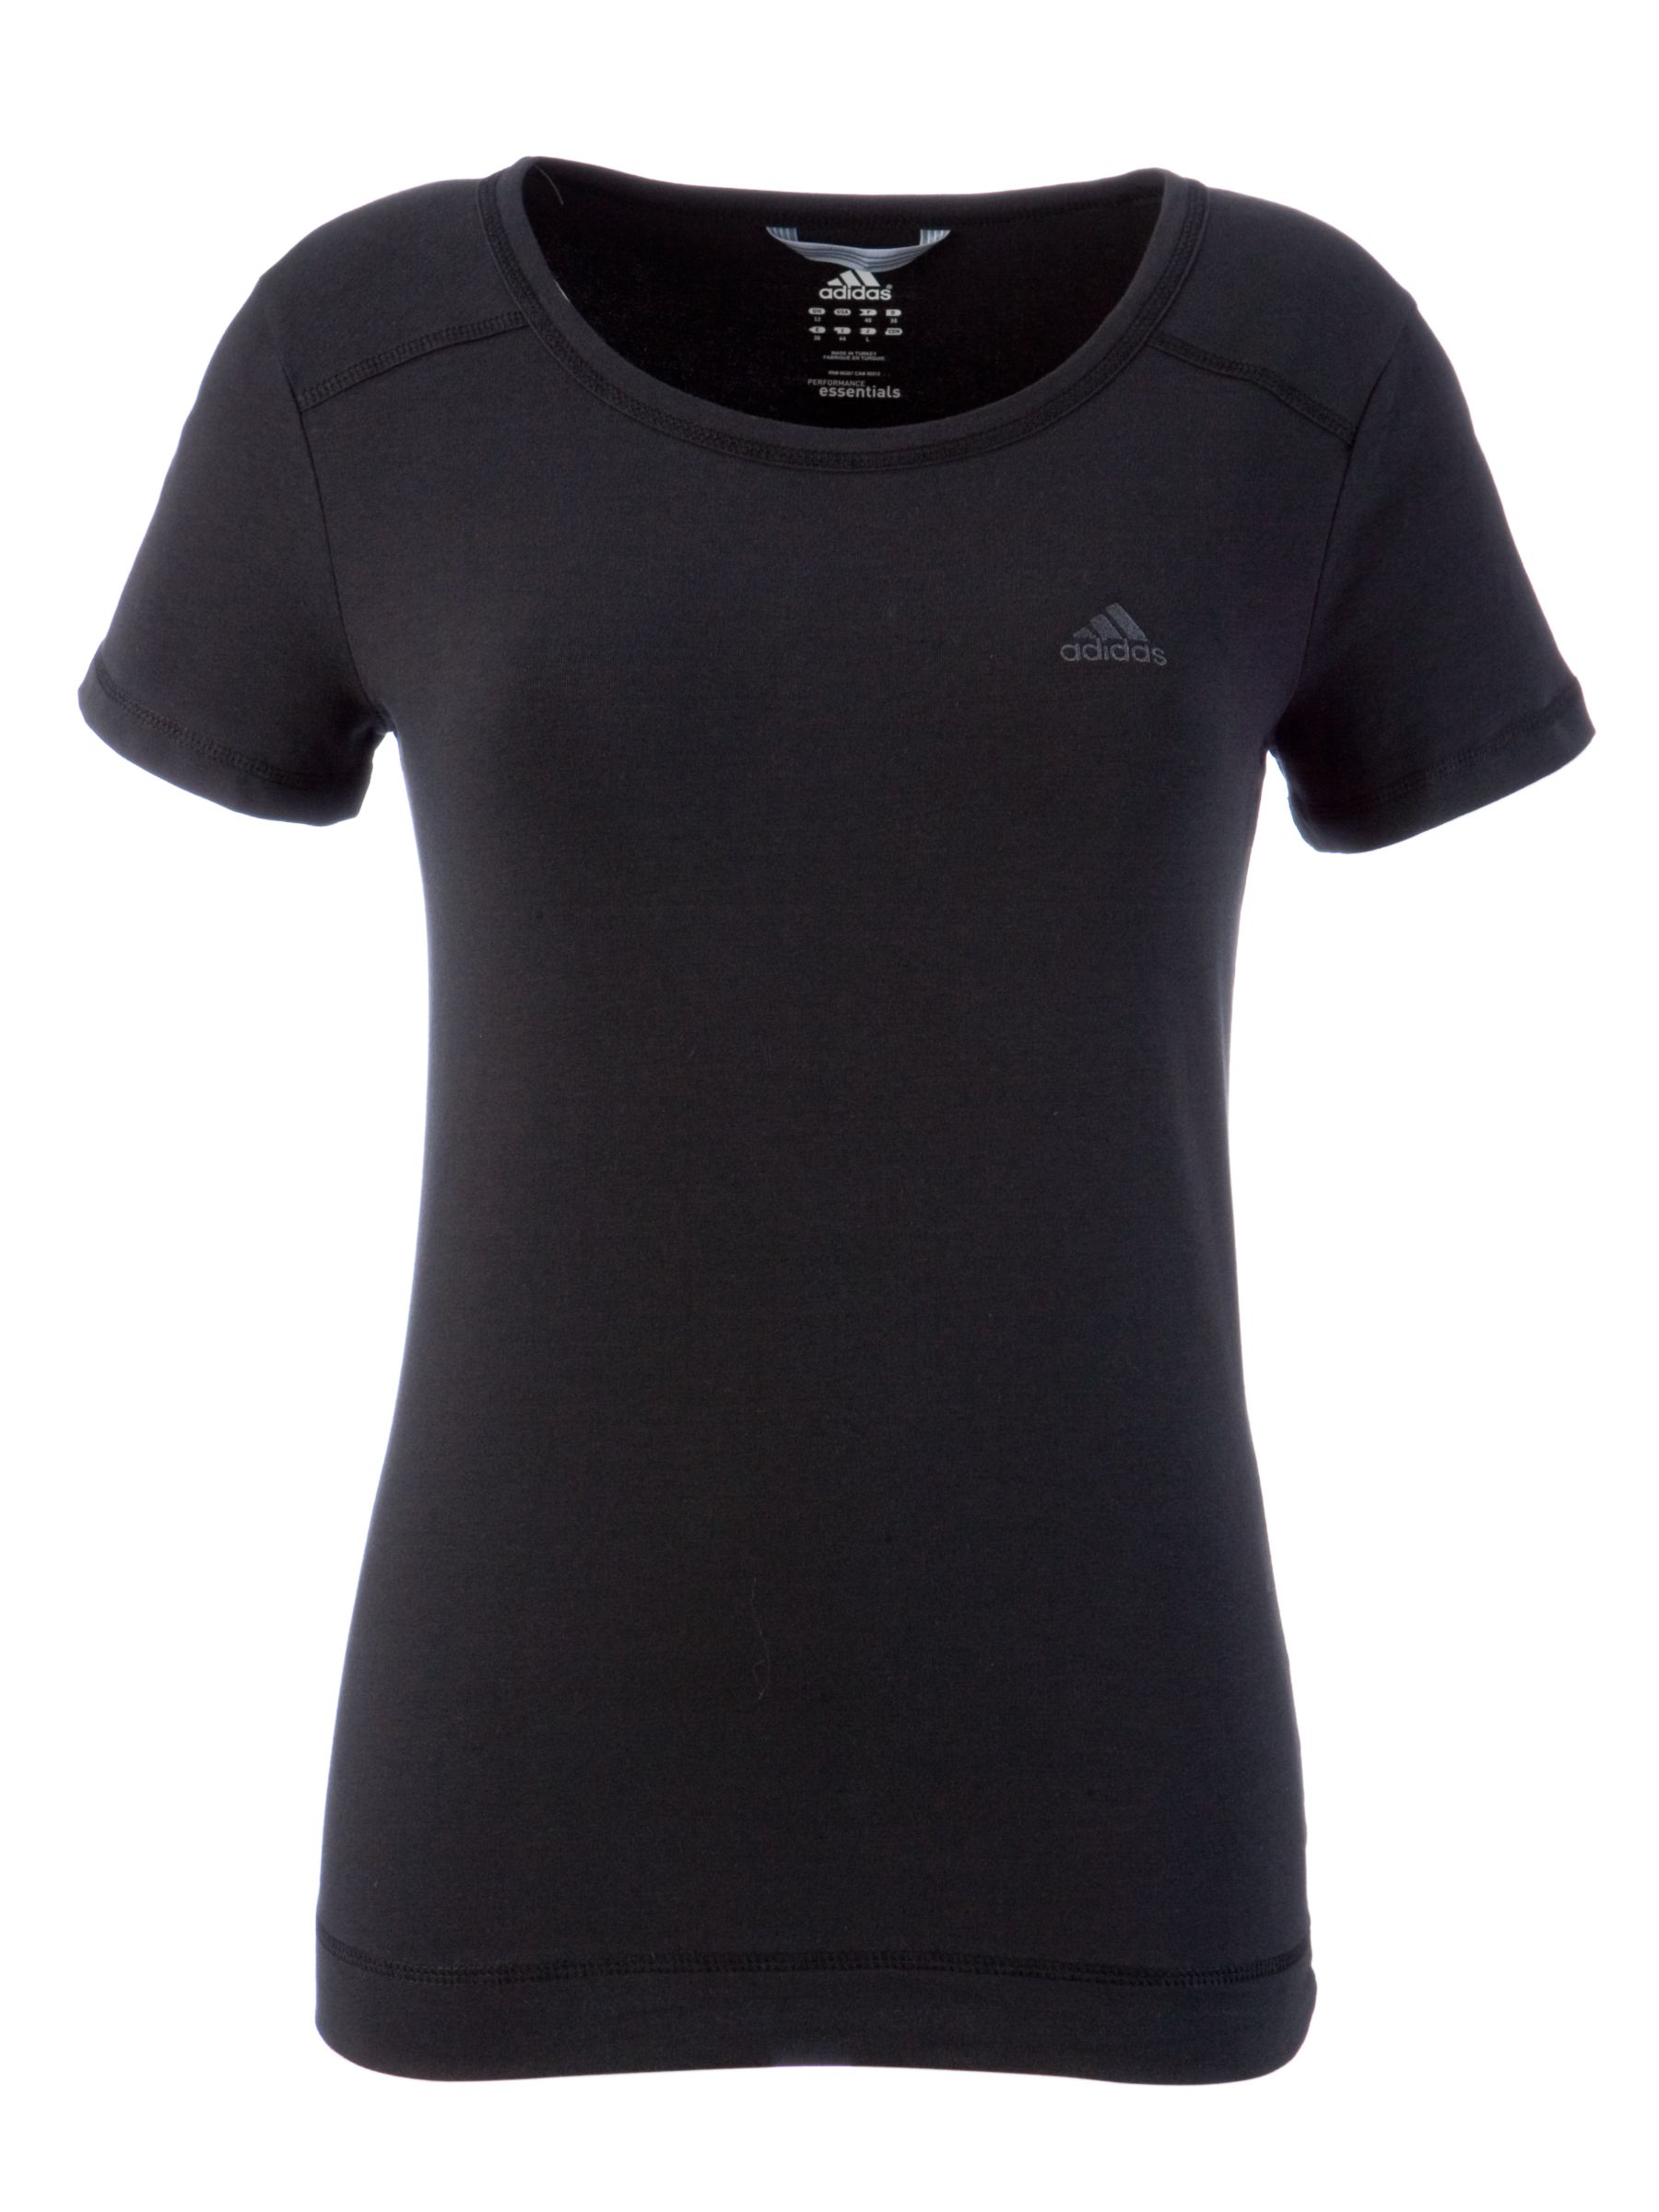 Adidas Essential Short Sleeve T-Shirt, Black